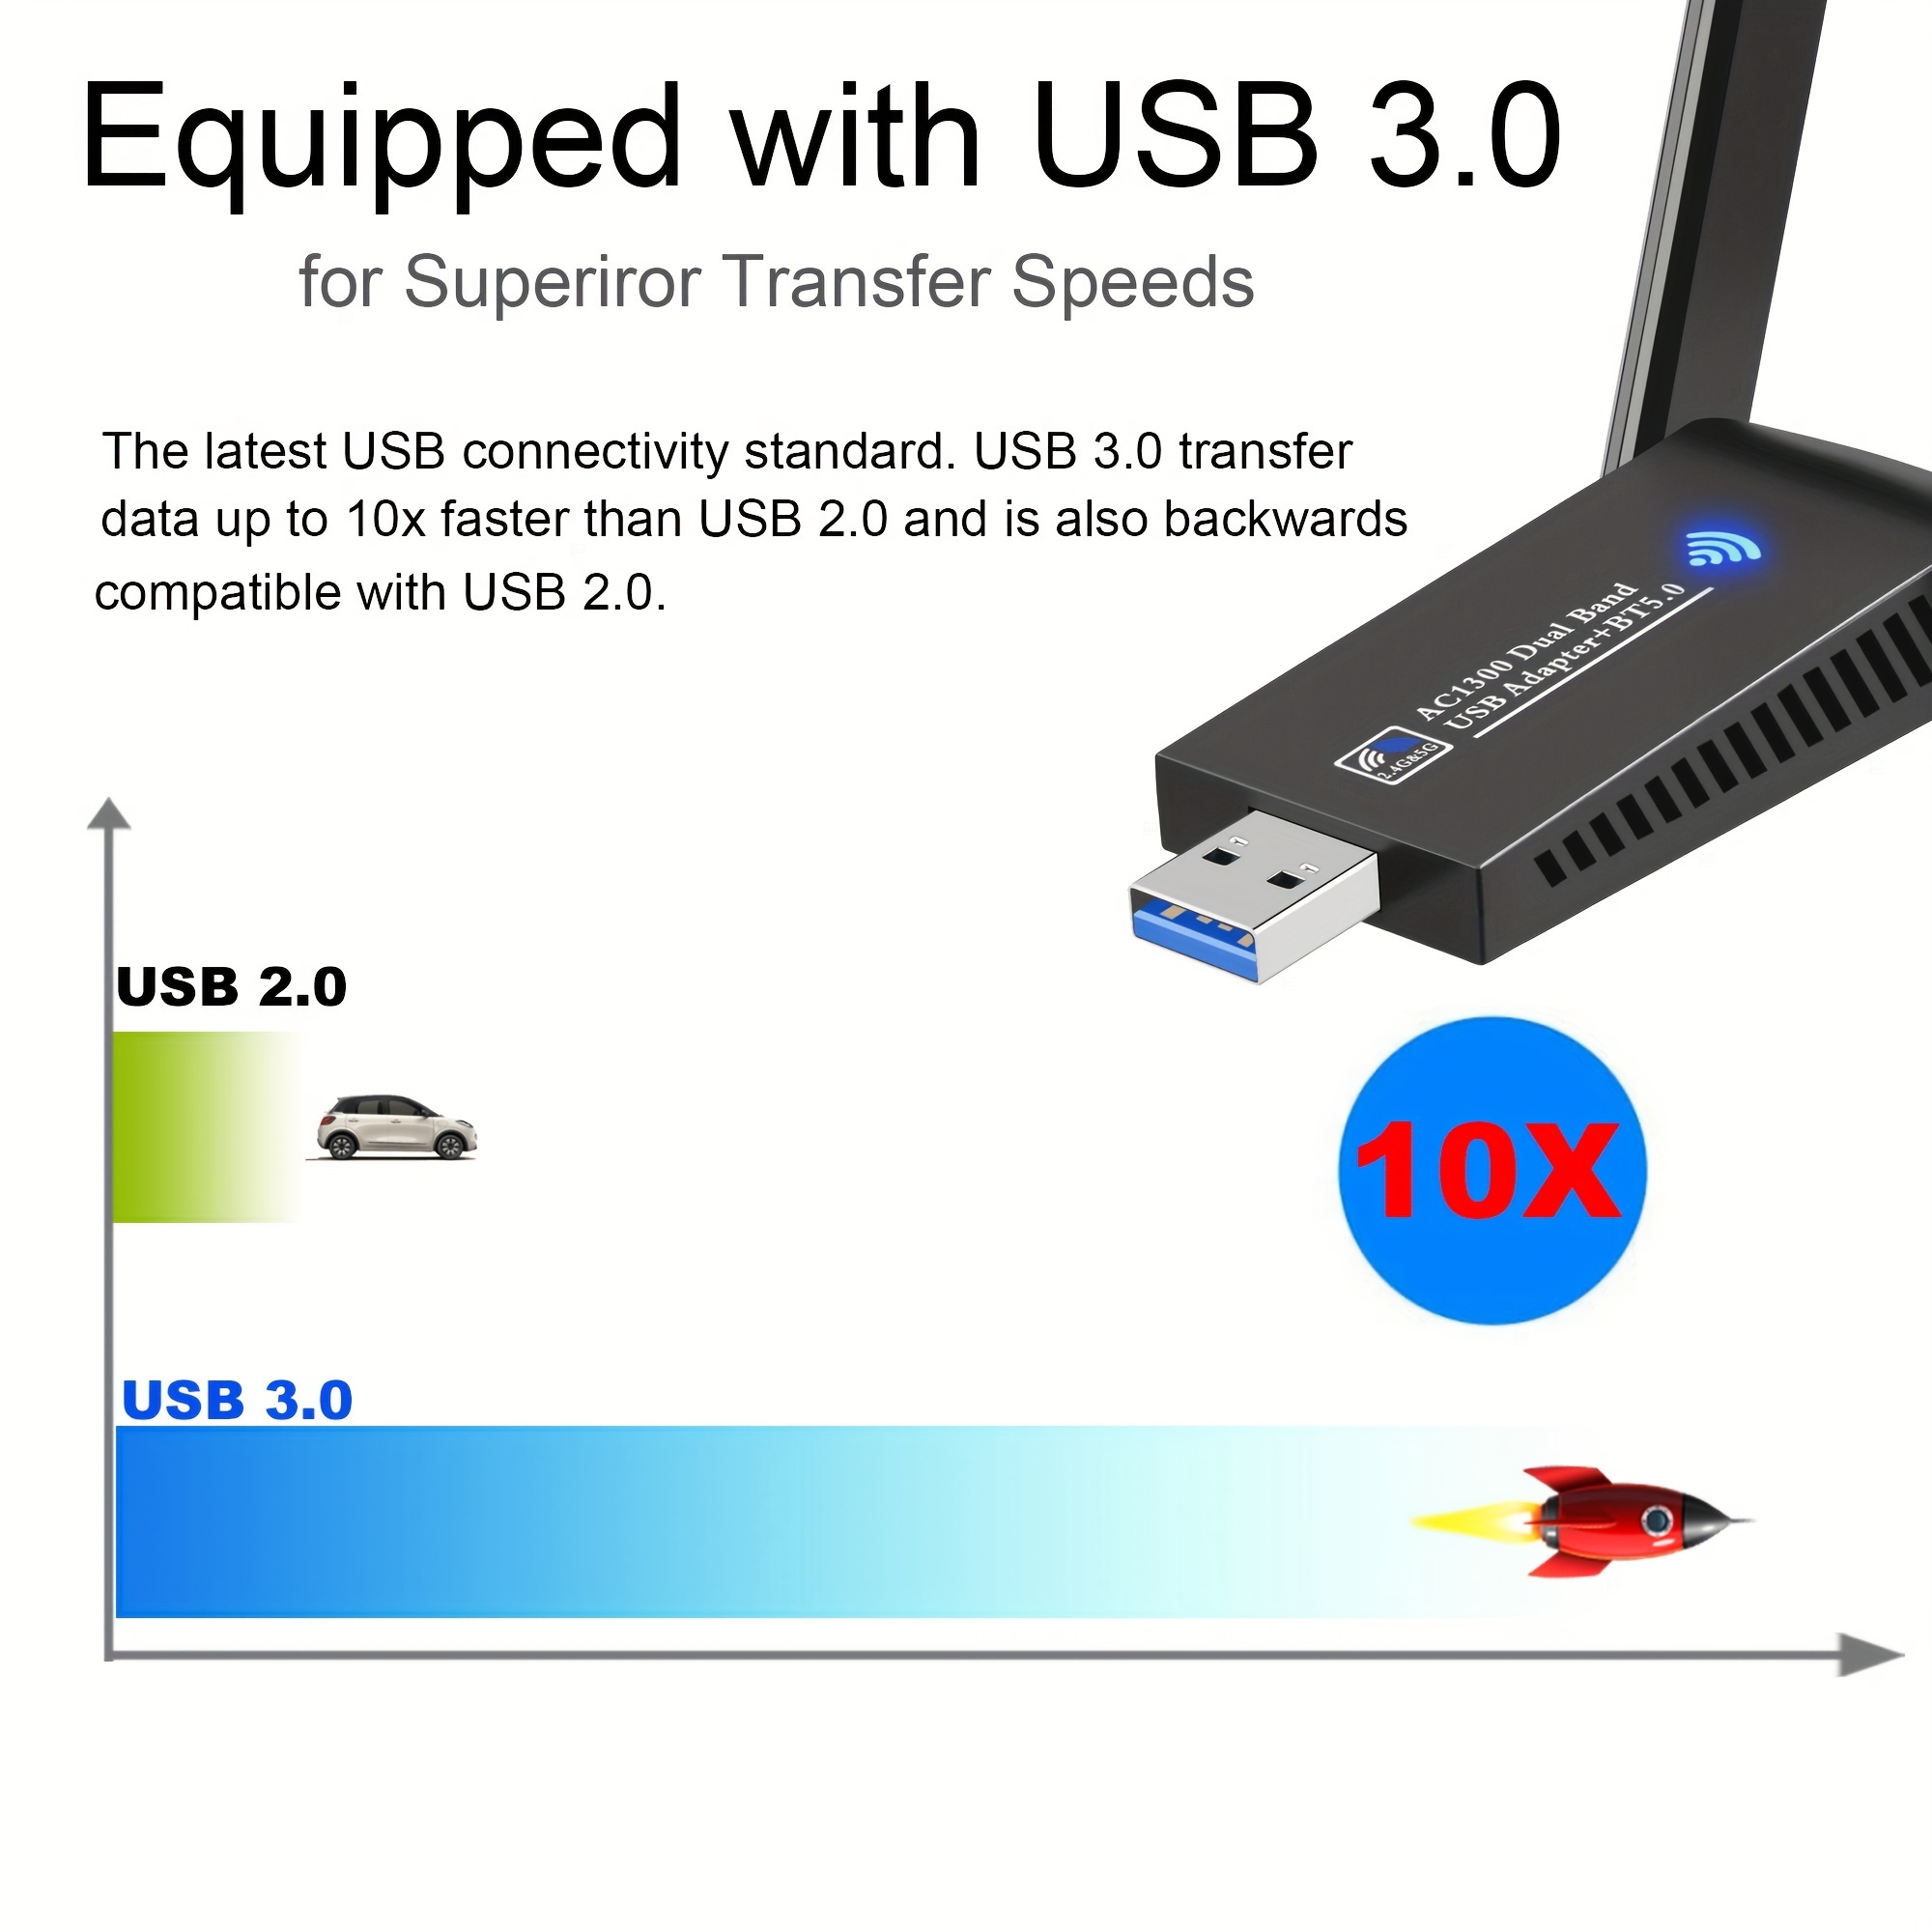 Adaptateur WiFi USB 600Mbps Bluetooth 5.0 Dongle 2 en 1 double